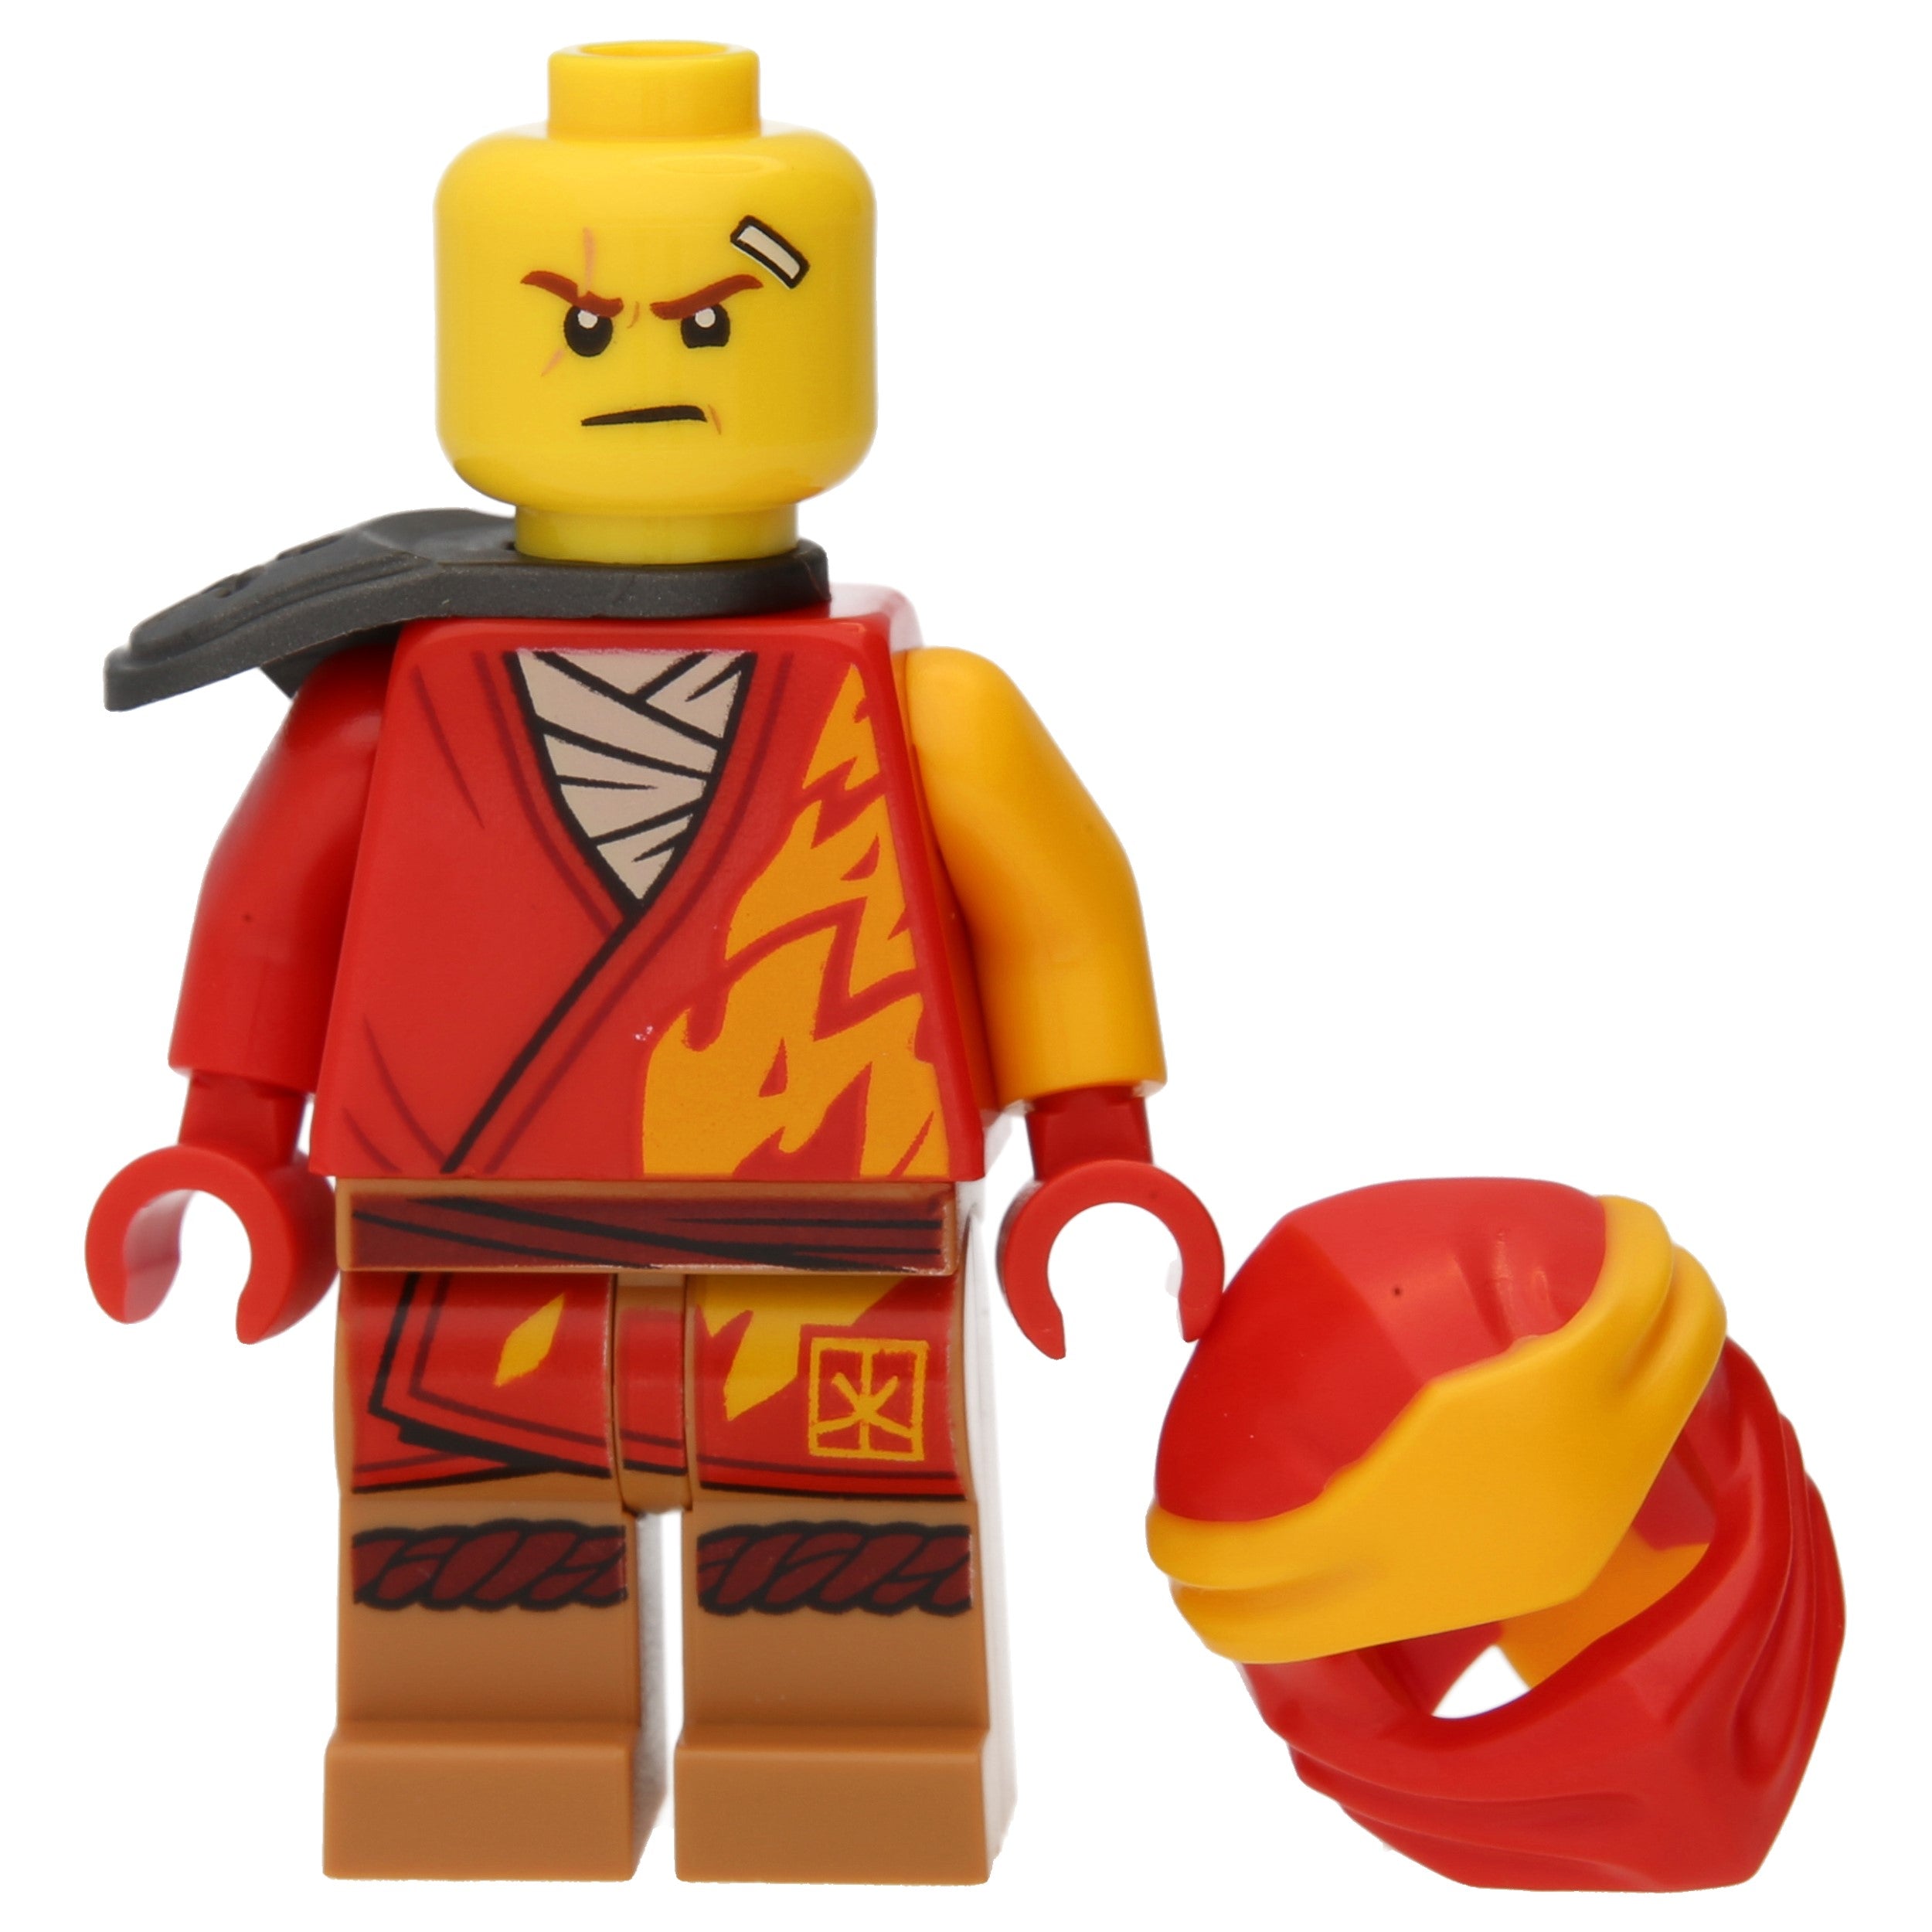 Lego Ninjago Minifigures - Kai with shoulder plate (core)